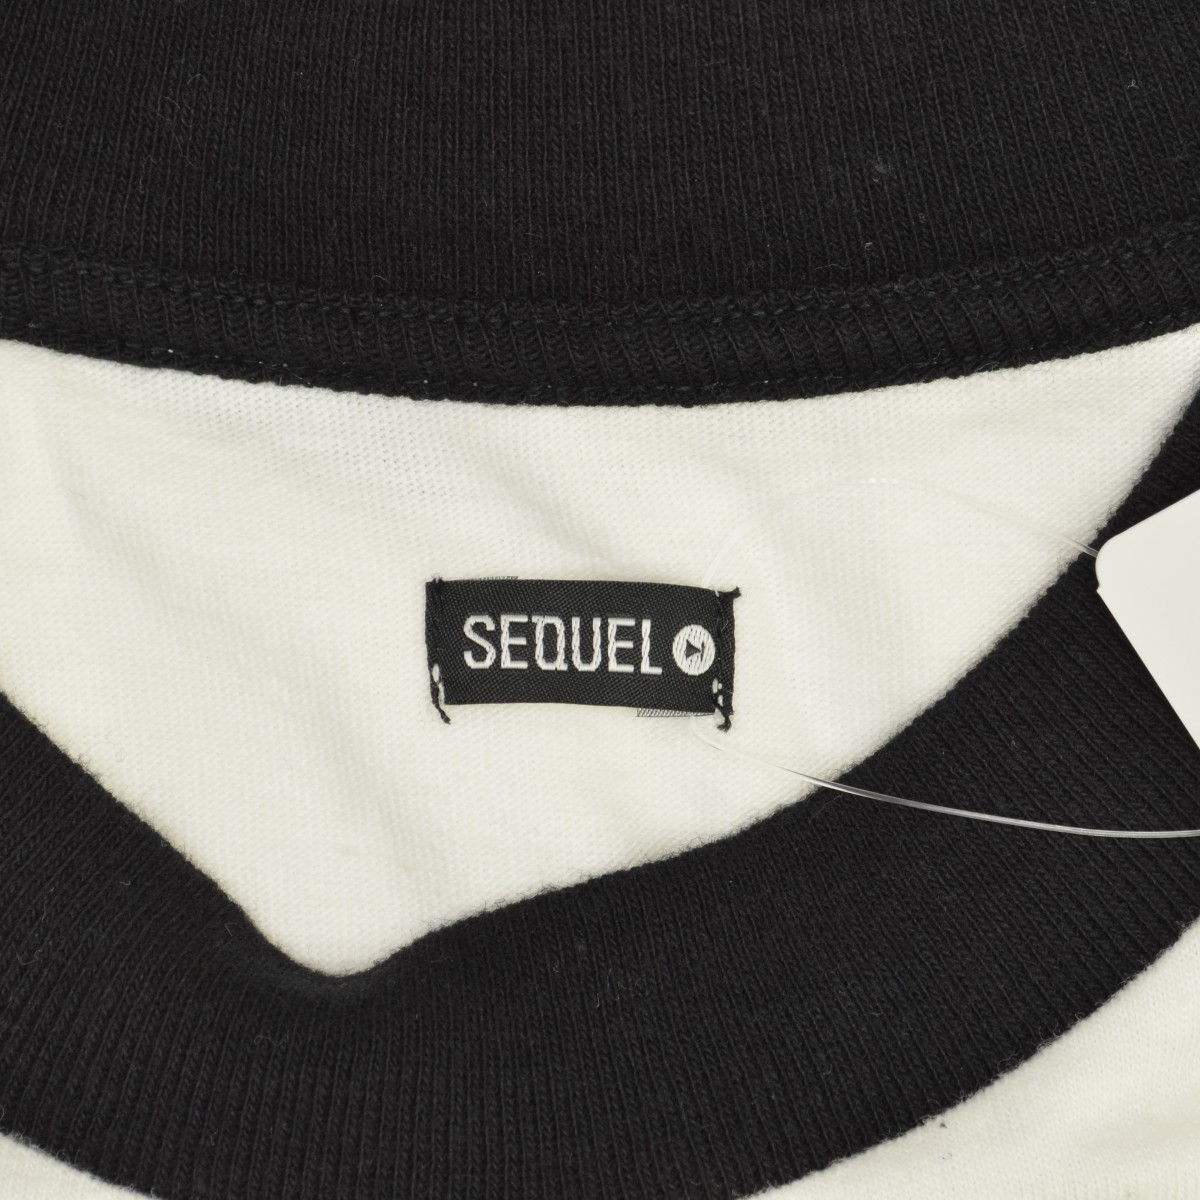 SEQUEL / シークエル 22SS SQ-22SS-ST-17 PRINT BORDER T-SHIRT BLACK x WHITE 半袖Tシャツ  -ブランド古着の買取販売カンフル